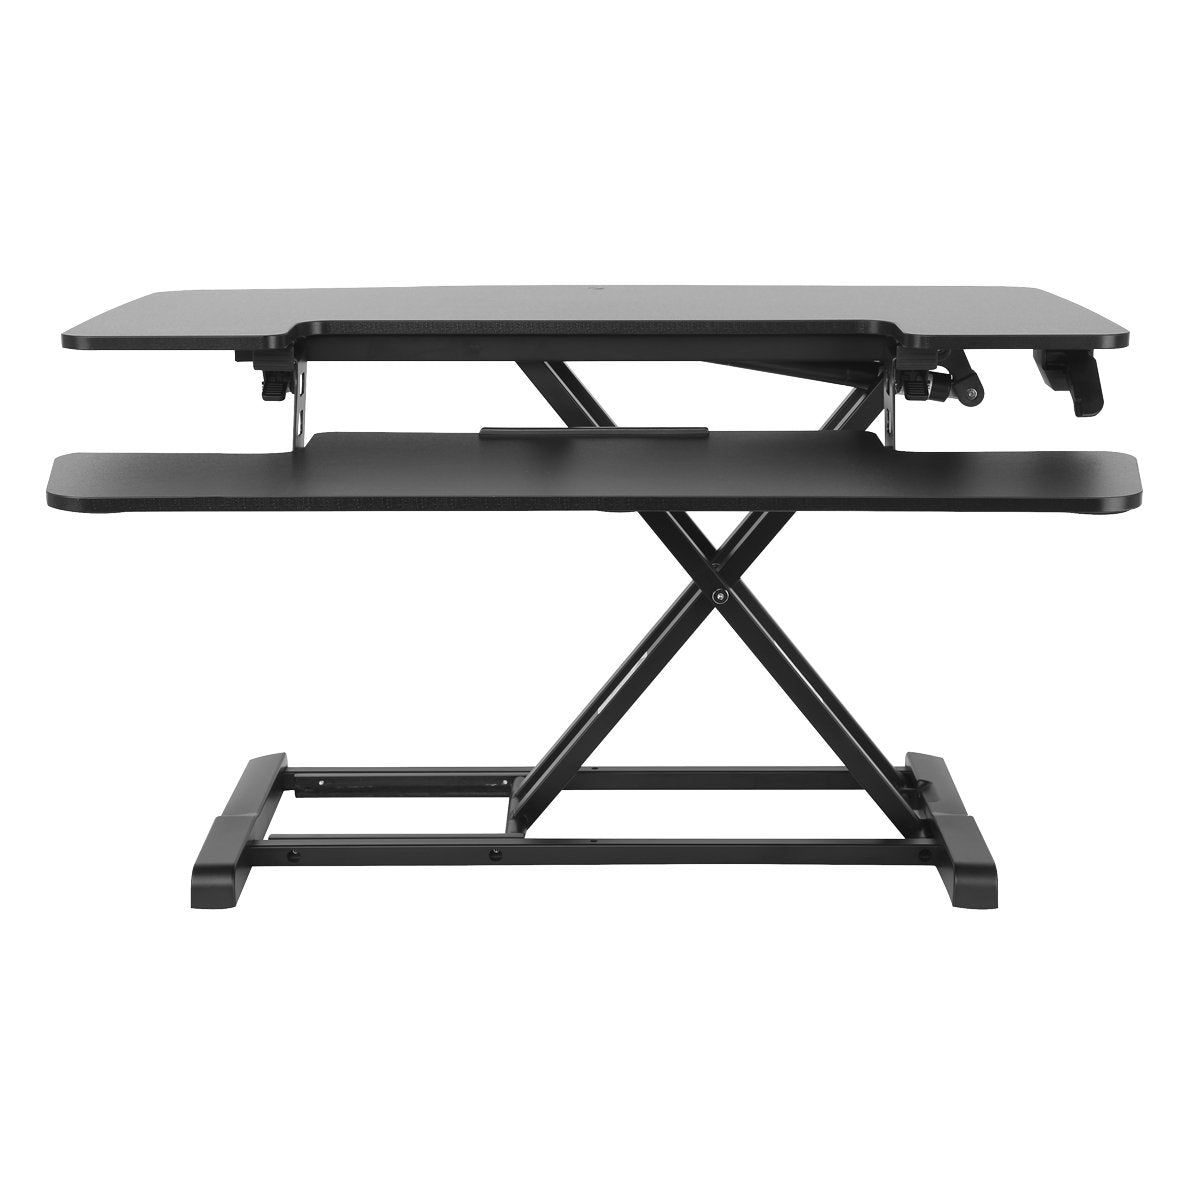 Dellonda DH15 89cm Height Adjustable Standing Desk Converter 50cm Max Height 15kg Capacity - McCormickTools